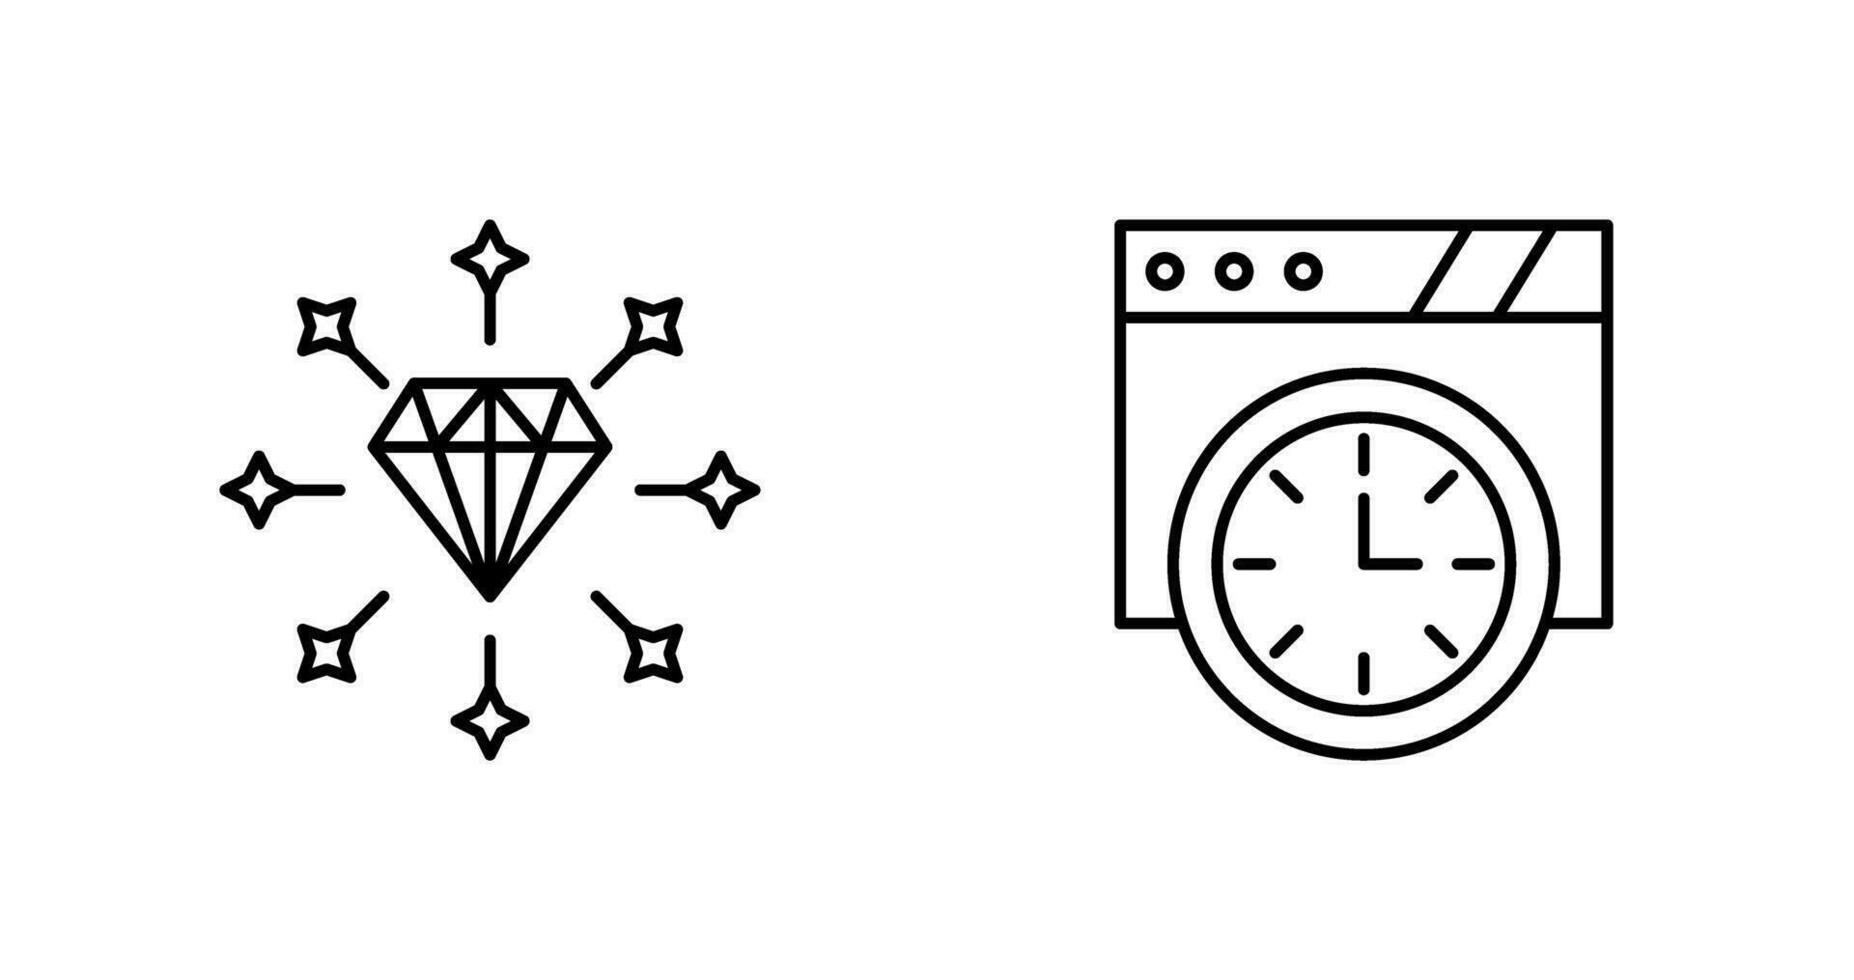 diamant et mur l'horloge icône vecteur